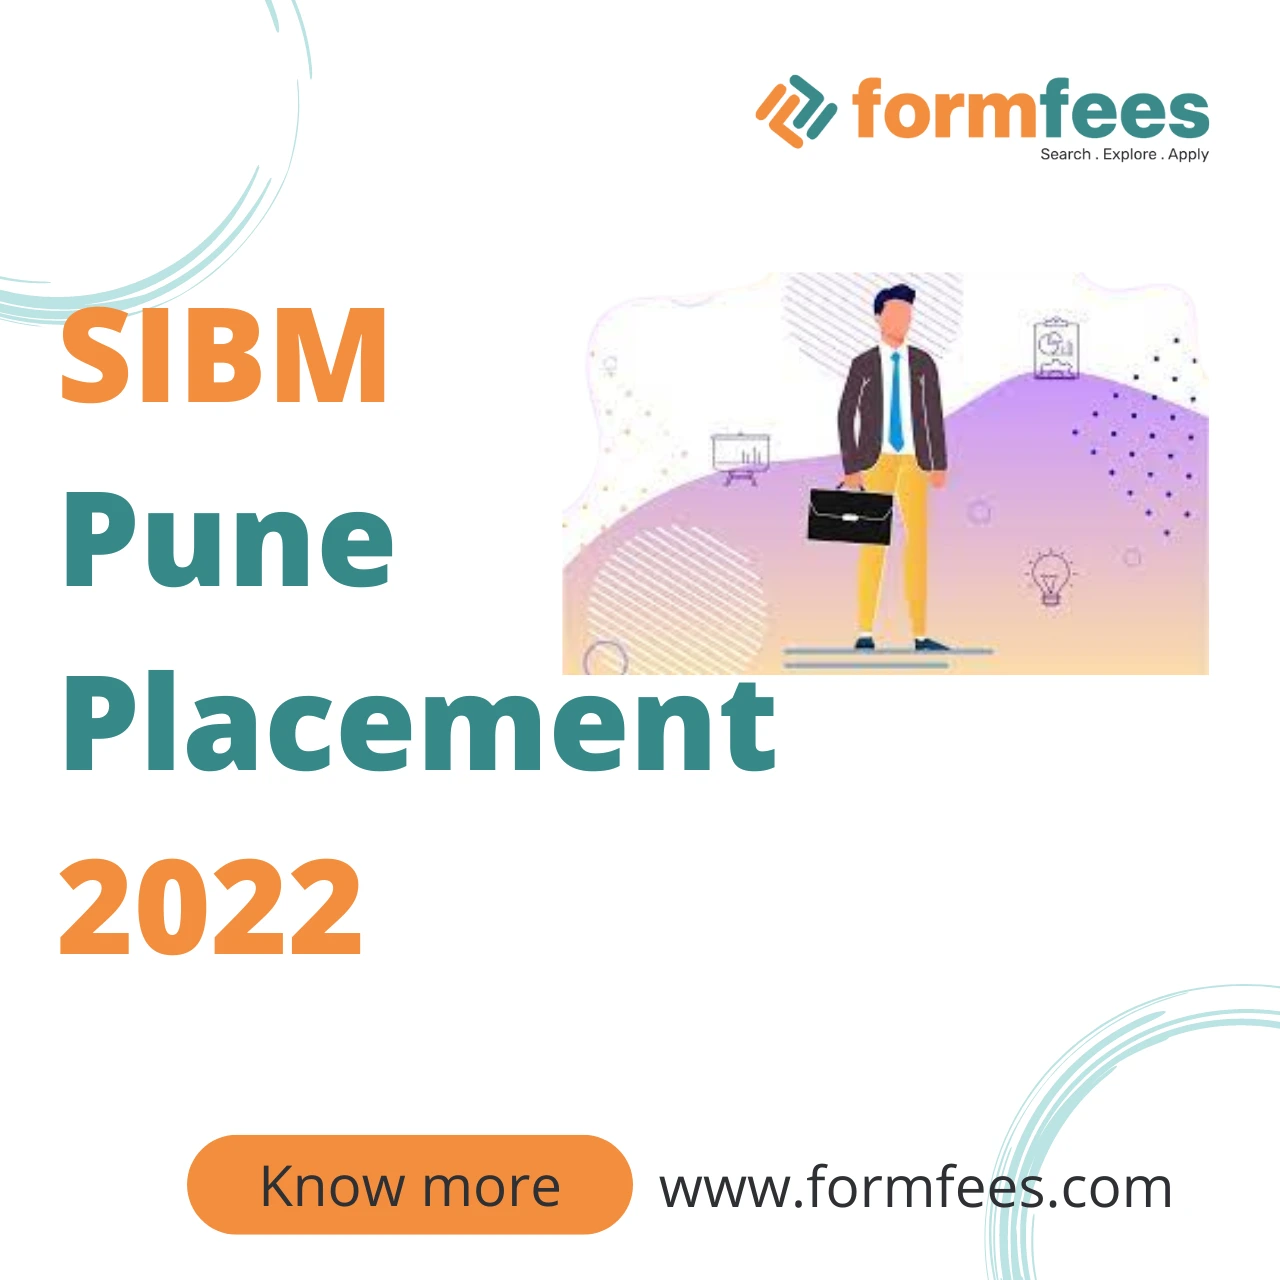 SIBM Pune Placement 2022